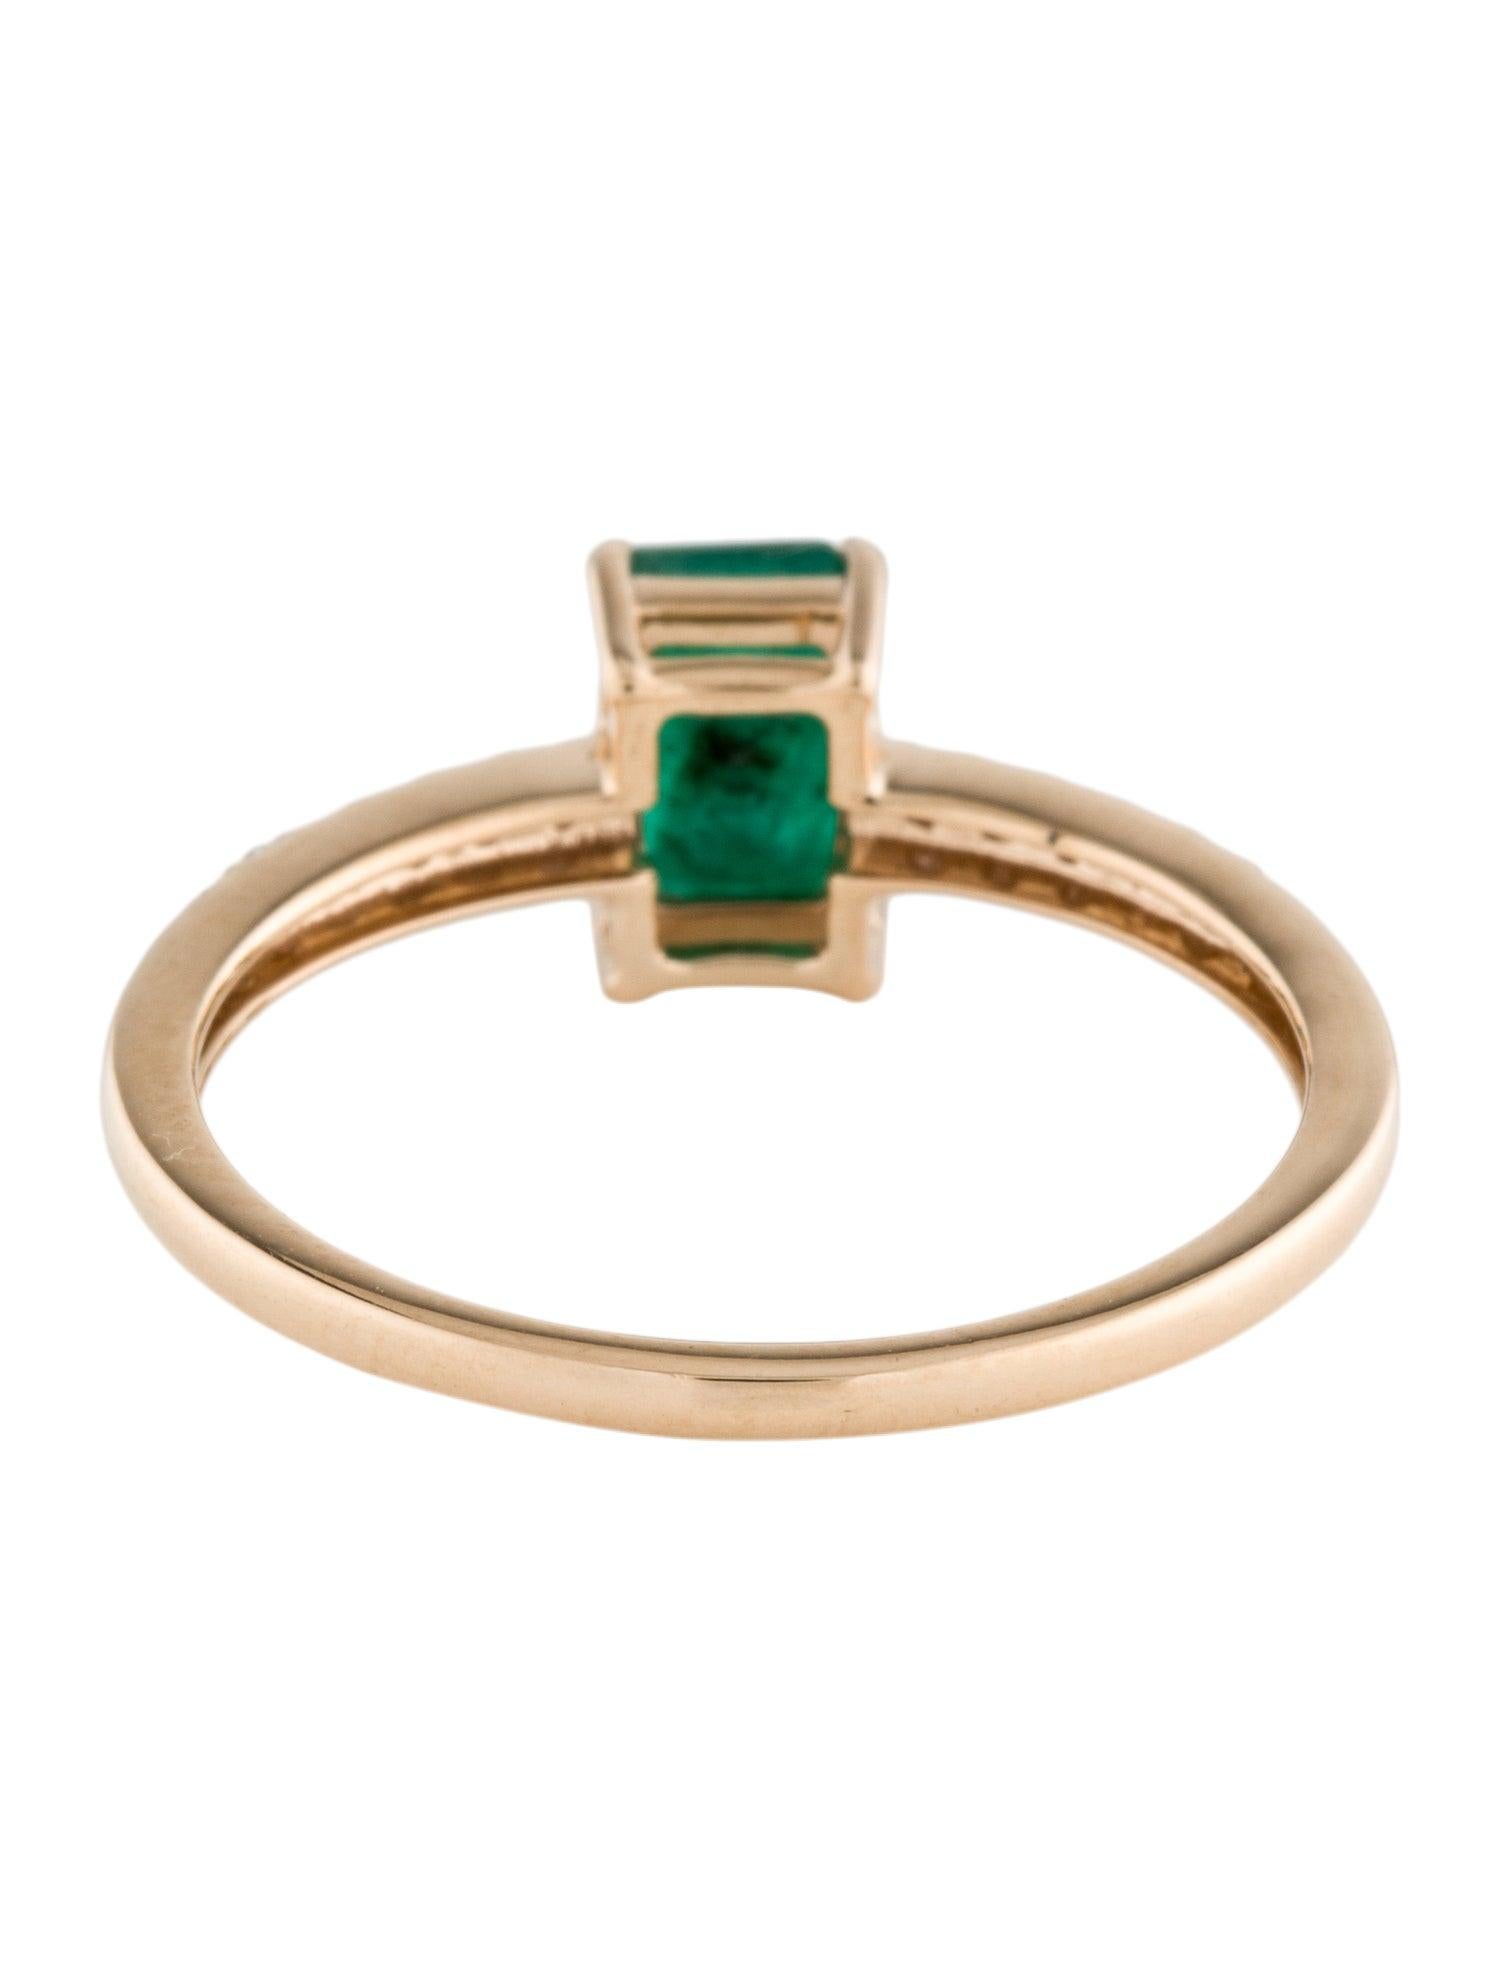 Brilliant Cut Elegant 14K Gold 1.05ct Emerald & Diamond Ring - Size 8.75 - Classic & Timeless For Sale